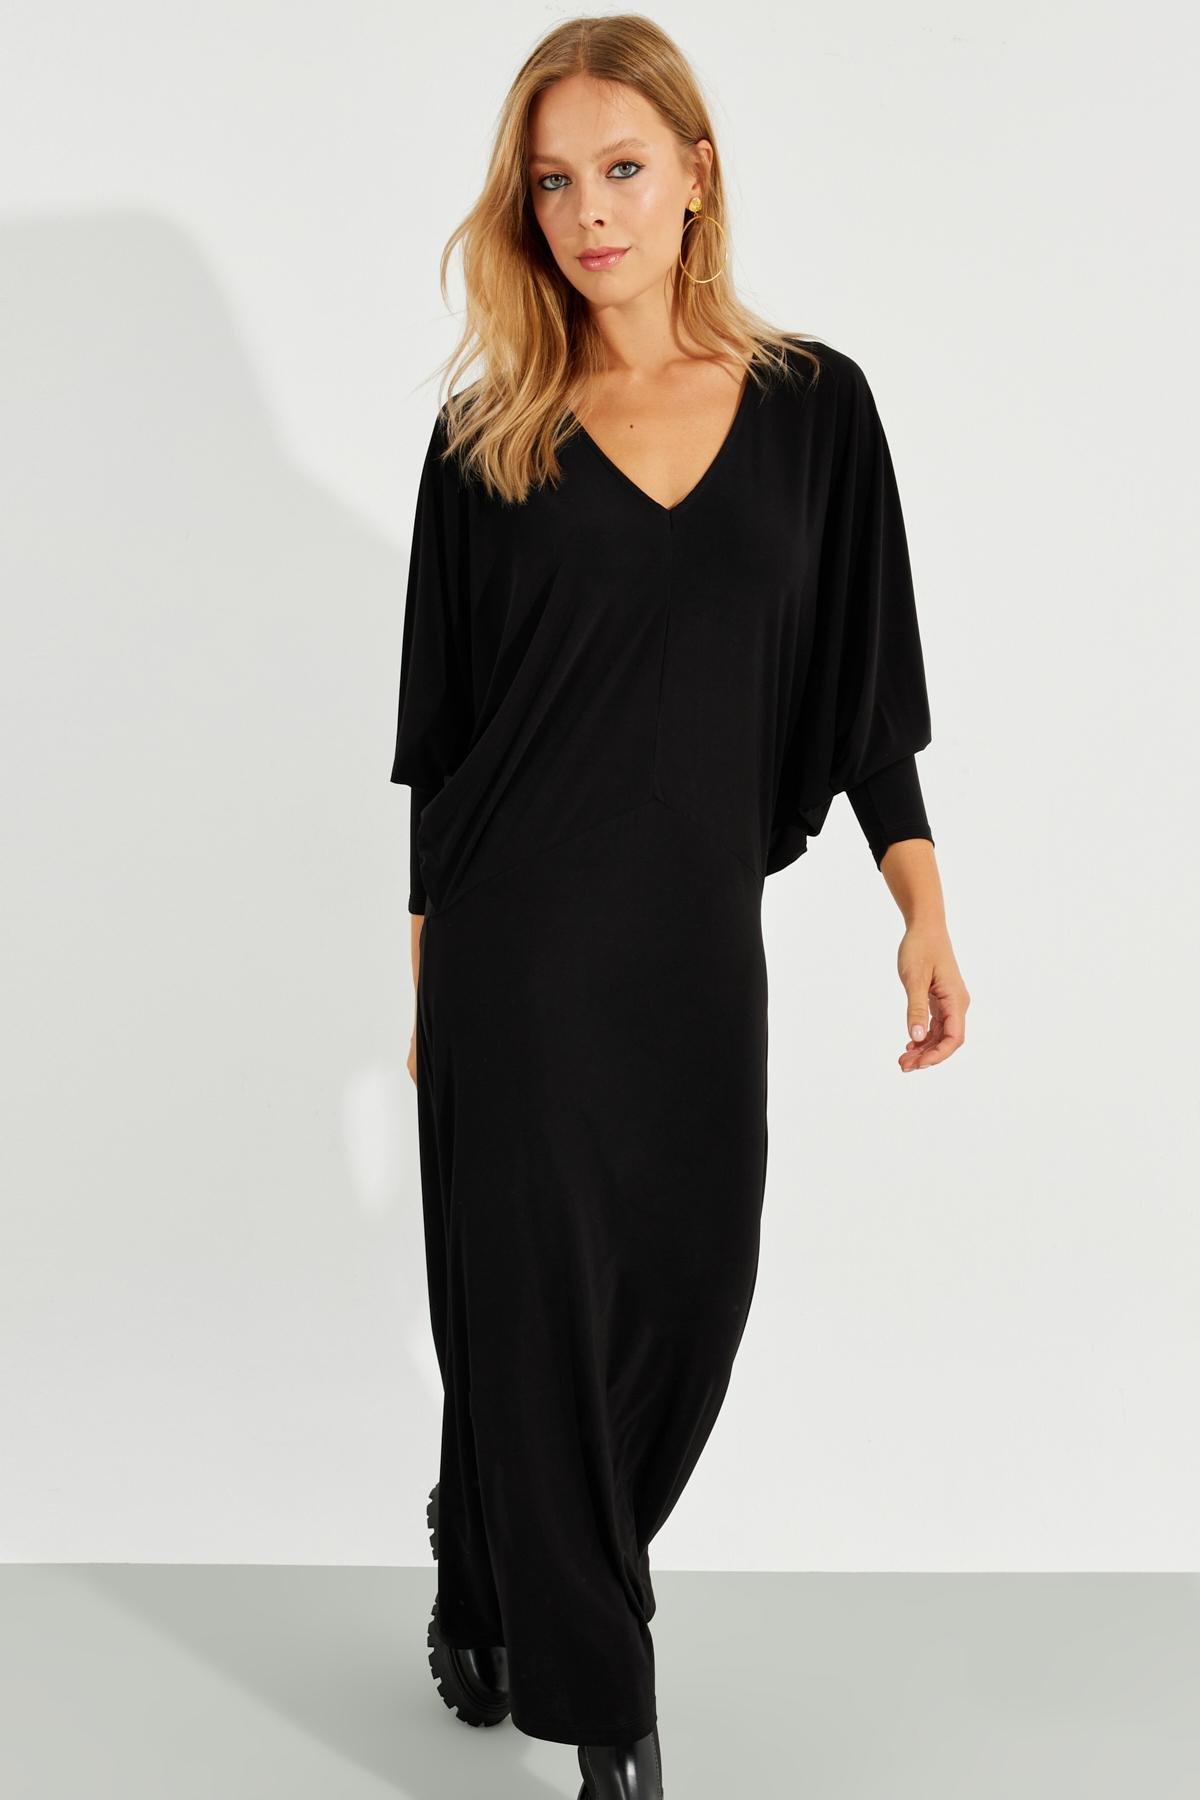 Cool & Sexy - Black Bat Sleeve Midi Dress